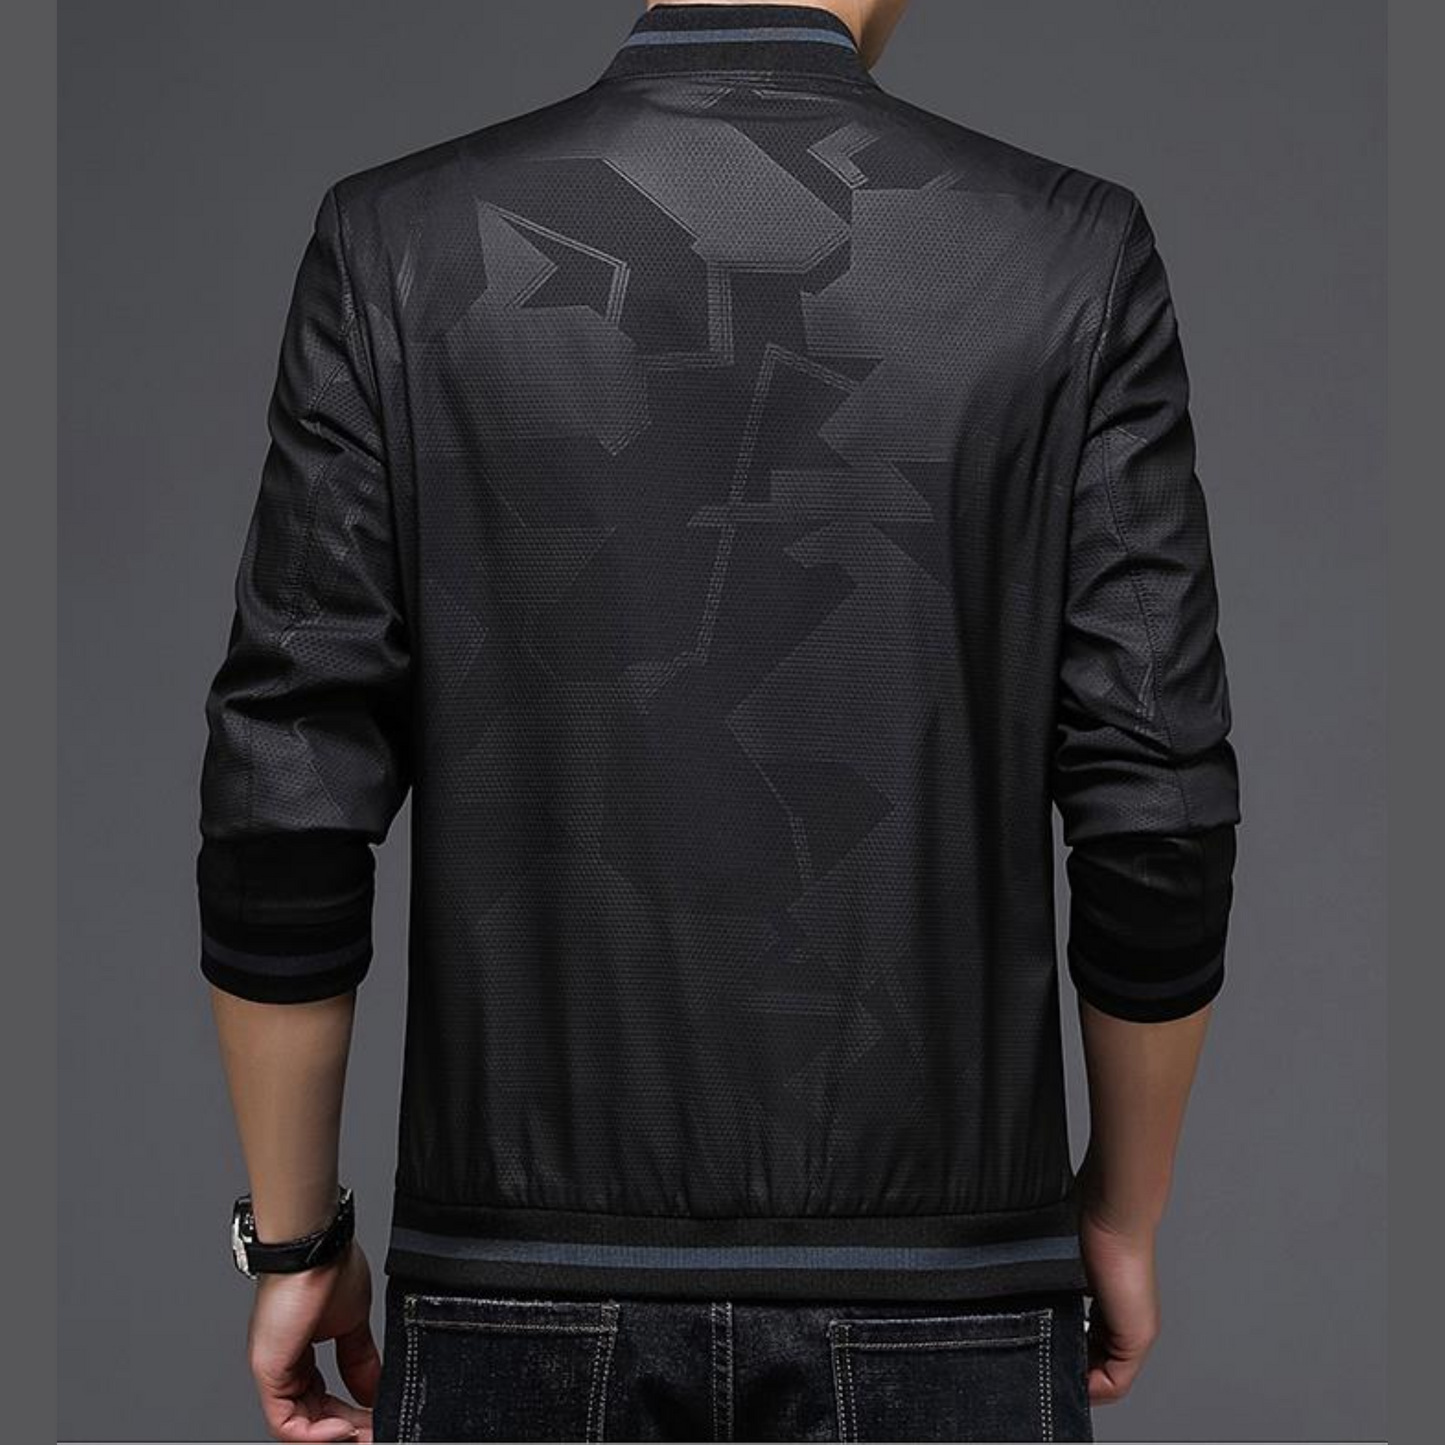 Jackson - Windbreaker Abstract Print Zipper Jacket